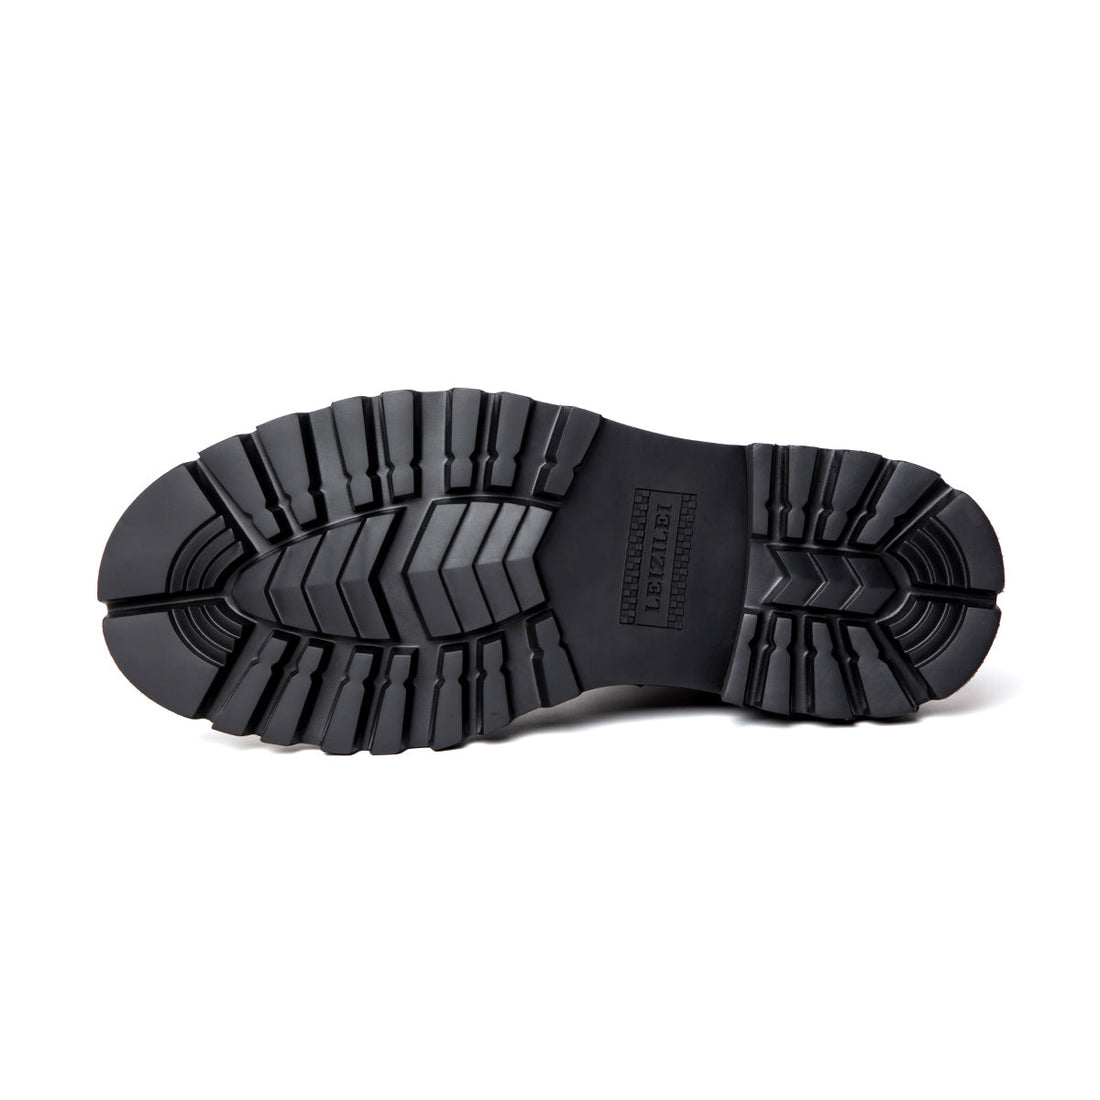 Men's genuine leather elasticated black Brogue Chelsea boots 900H01A µĸ±±¾ LEIZILEI